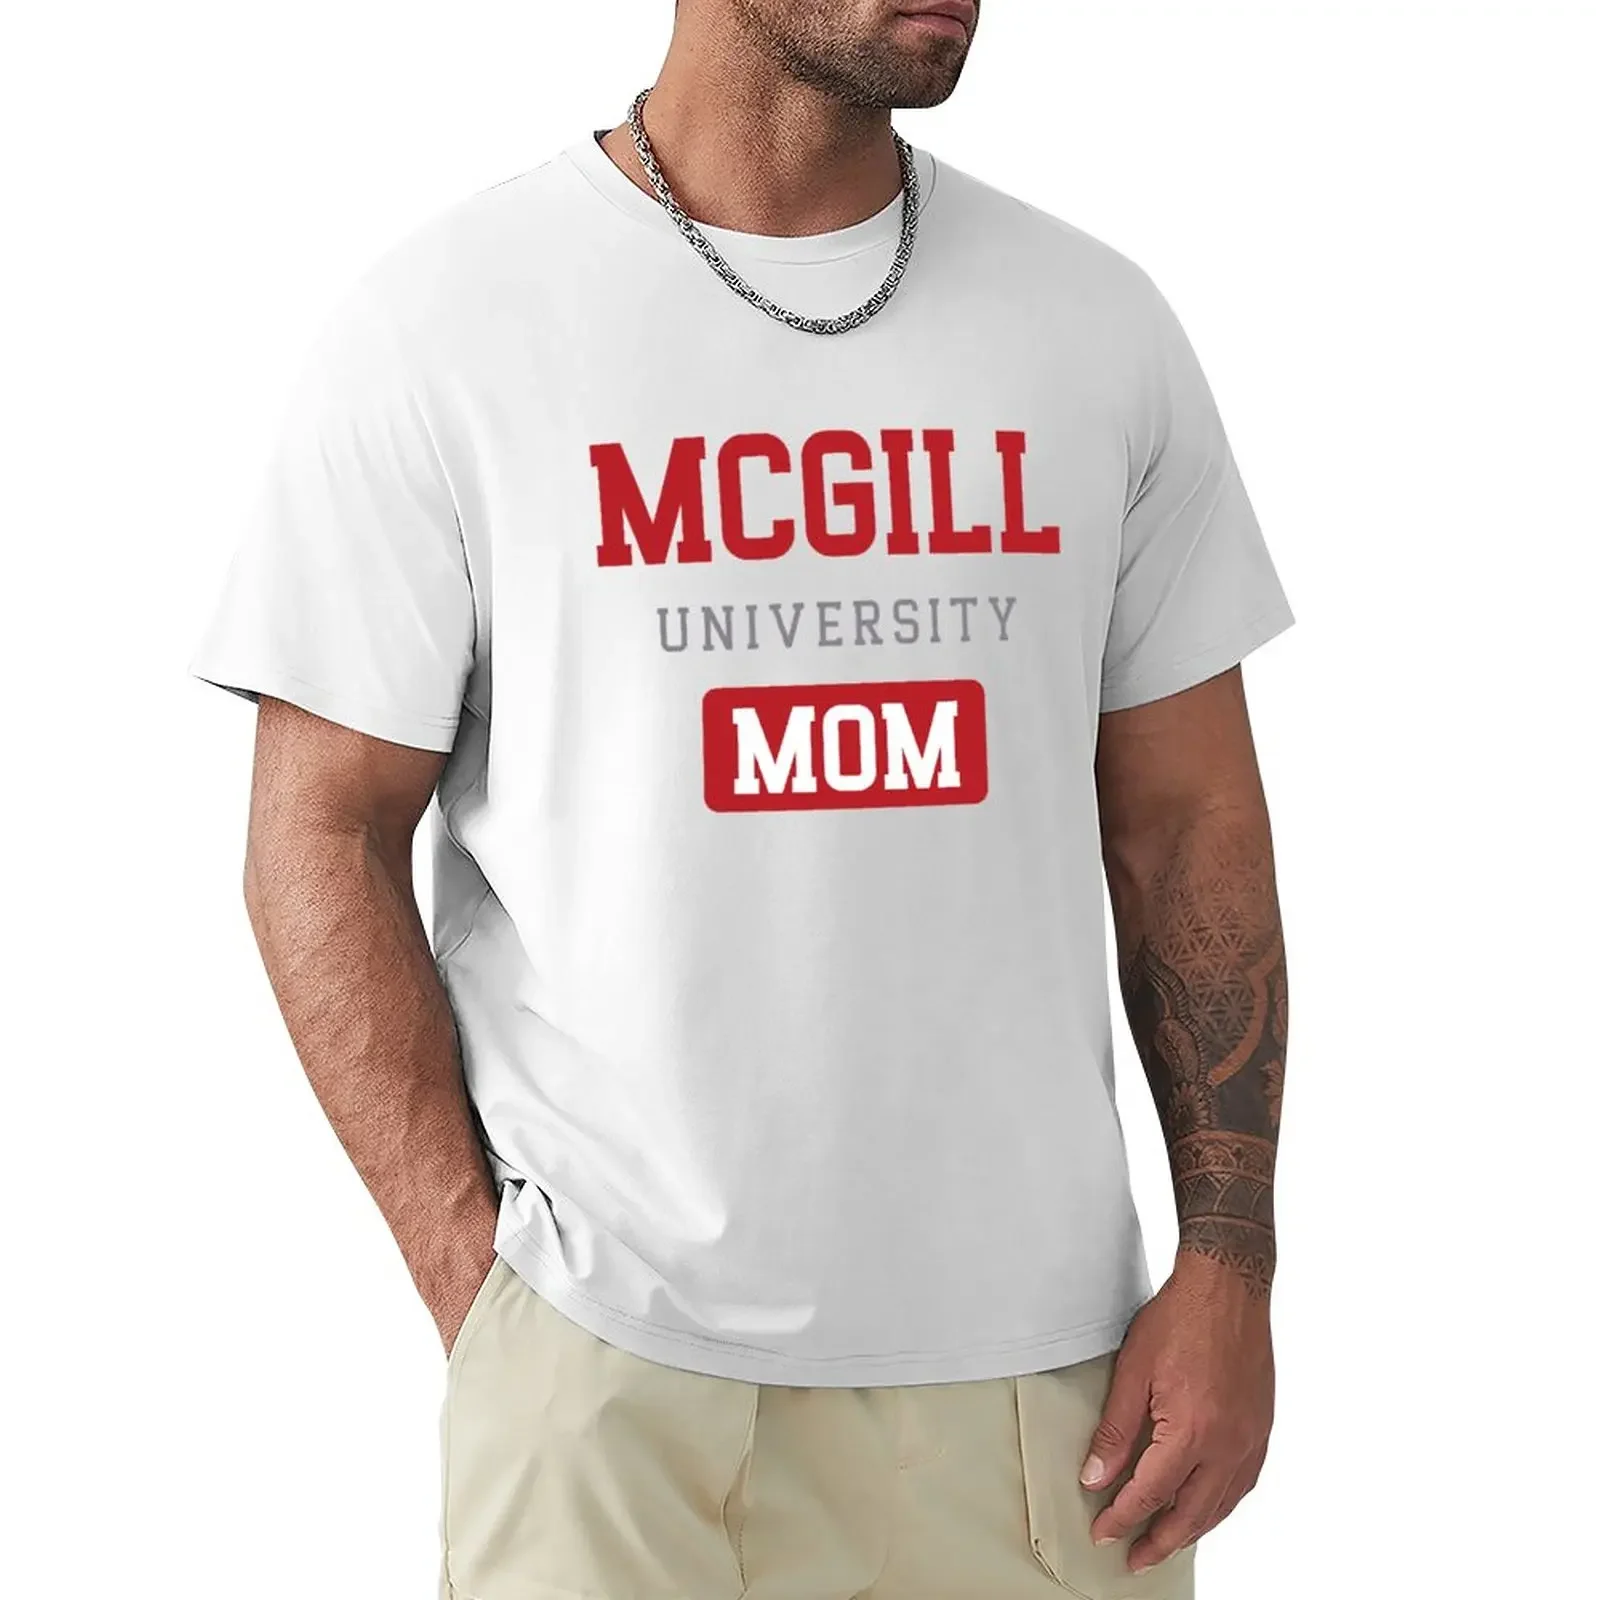 

McGill University mom T-Shirt cat shirts tops Oversized t-shirt clothes for men